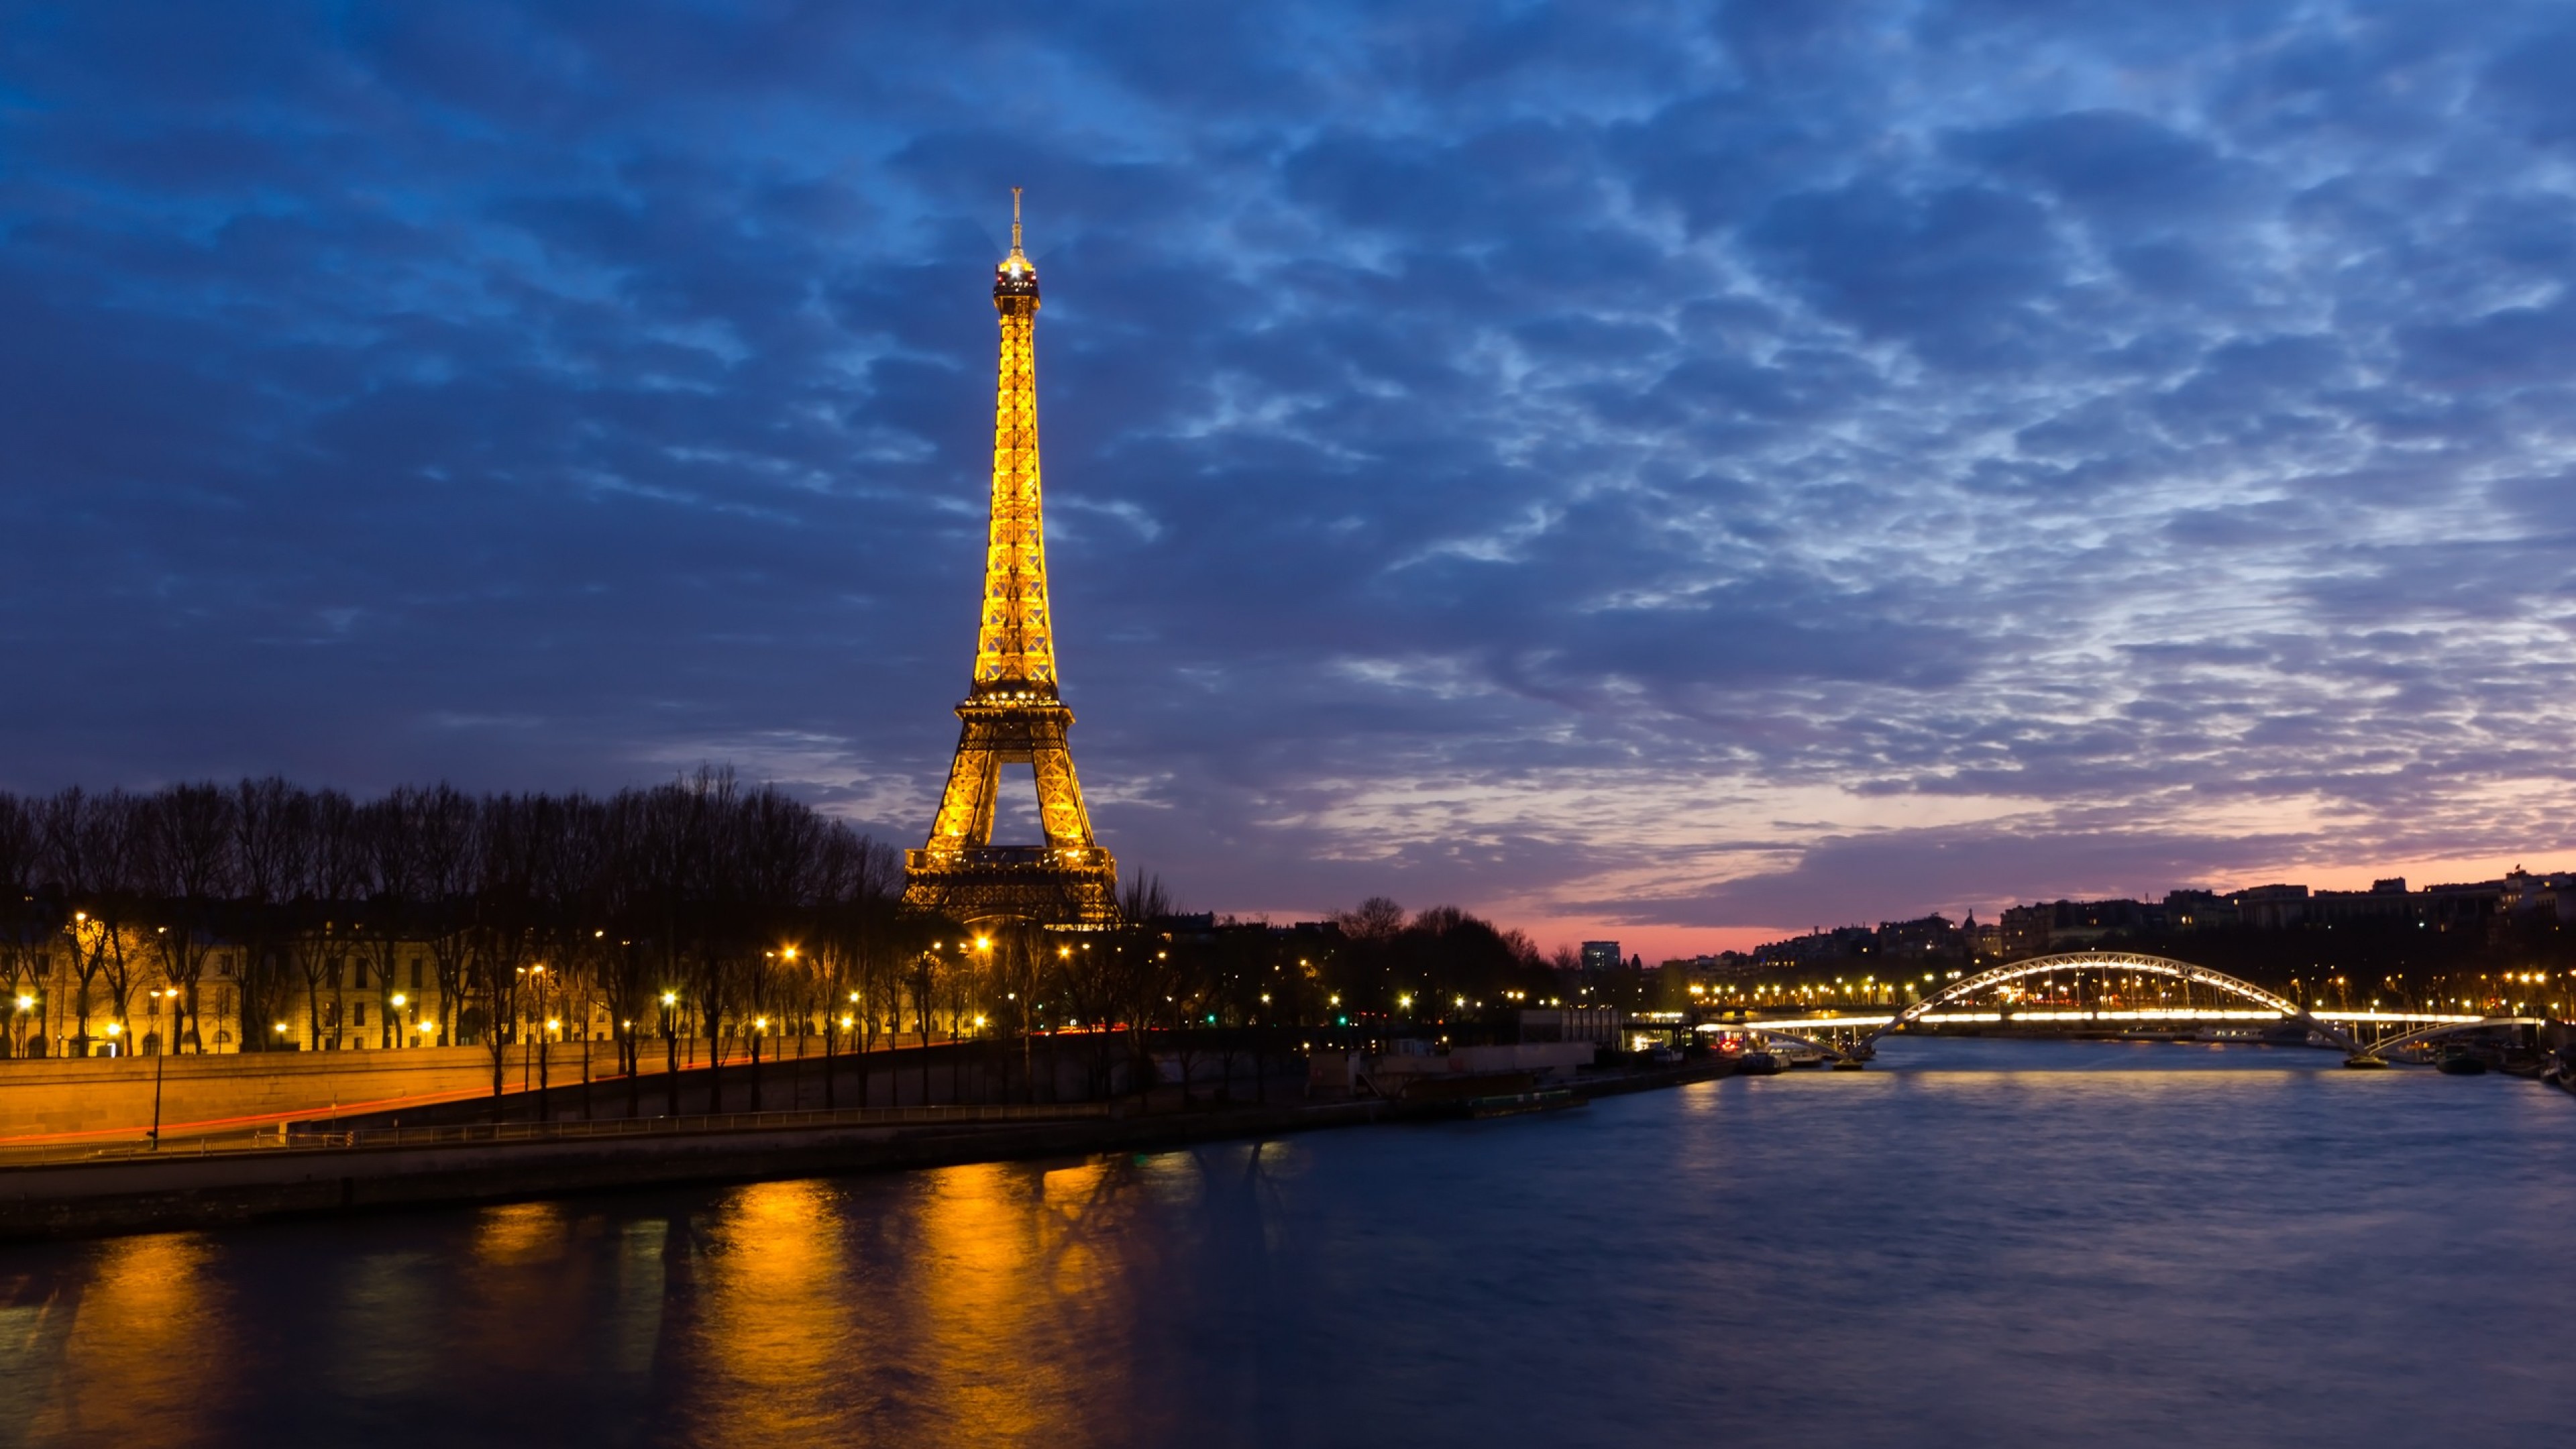 France pictures. Эйфелева башня в Париже. Эйфелева башня в Париже ночью. Франция эфельная башня. Эйфелева башня река сена.